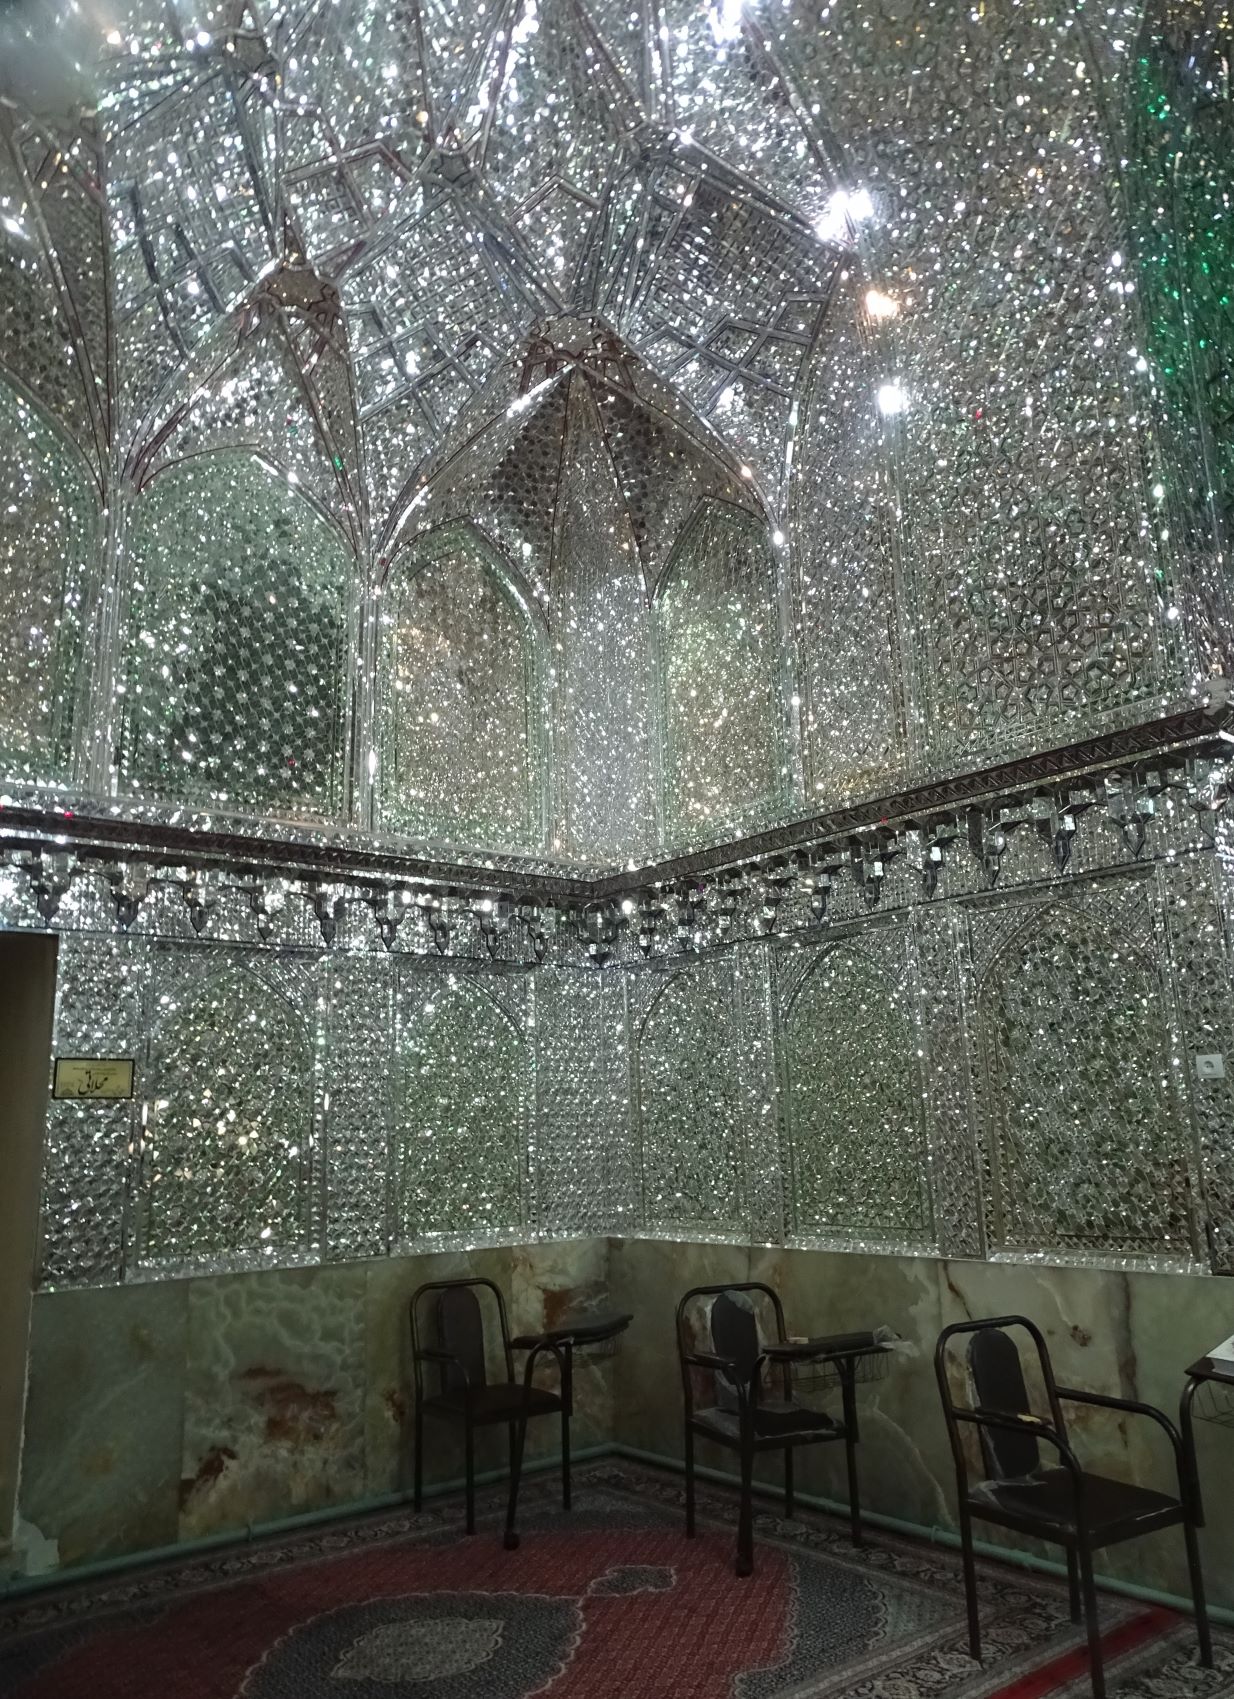 Shah Cheragh Monument and Mosque, Shiraz, Iran